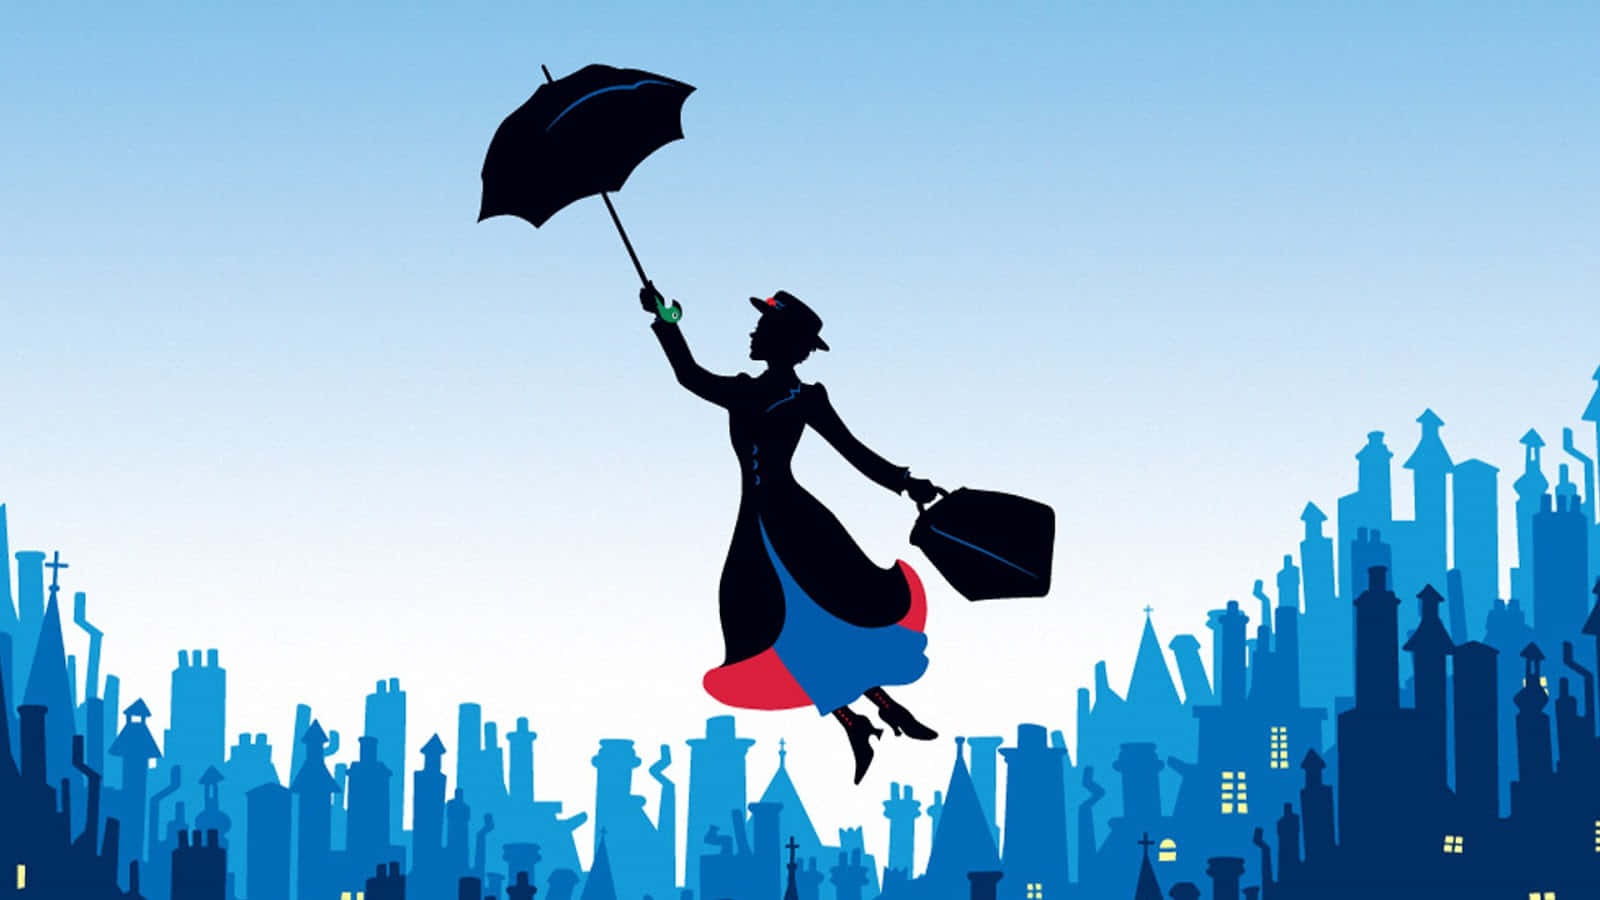 Captivating Mary Poppins Wallpaper